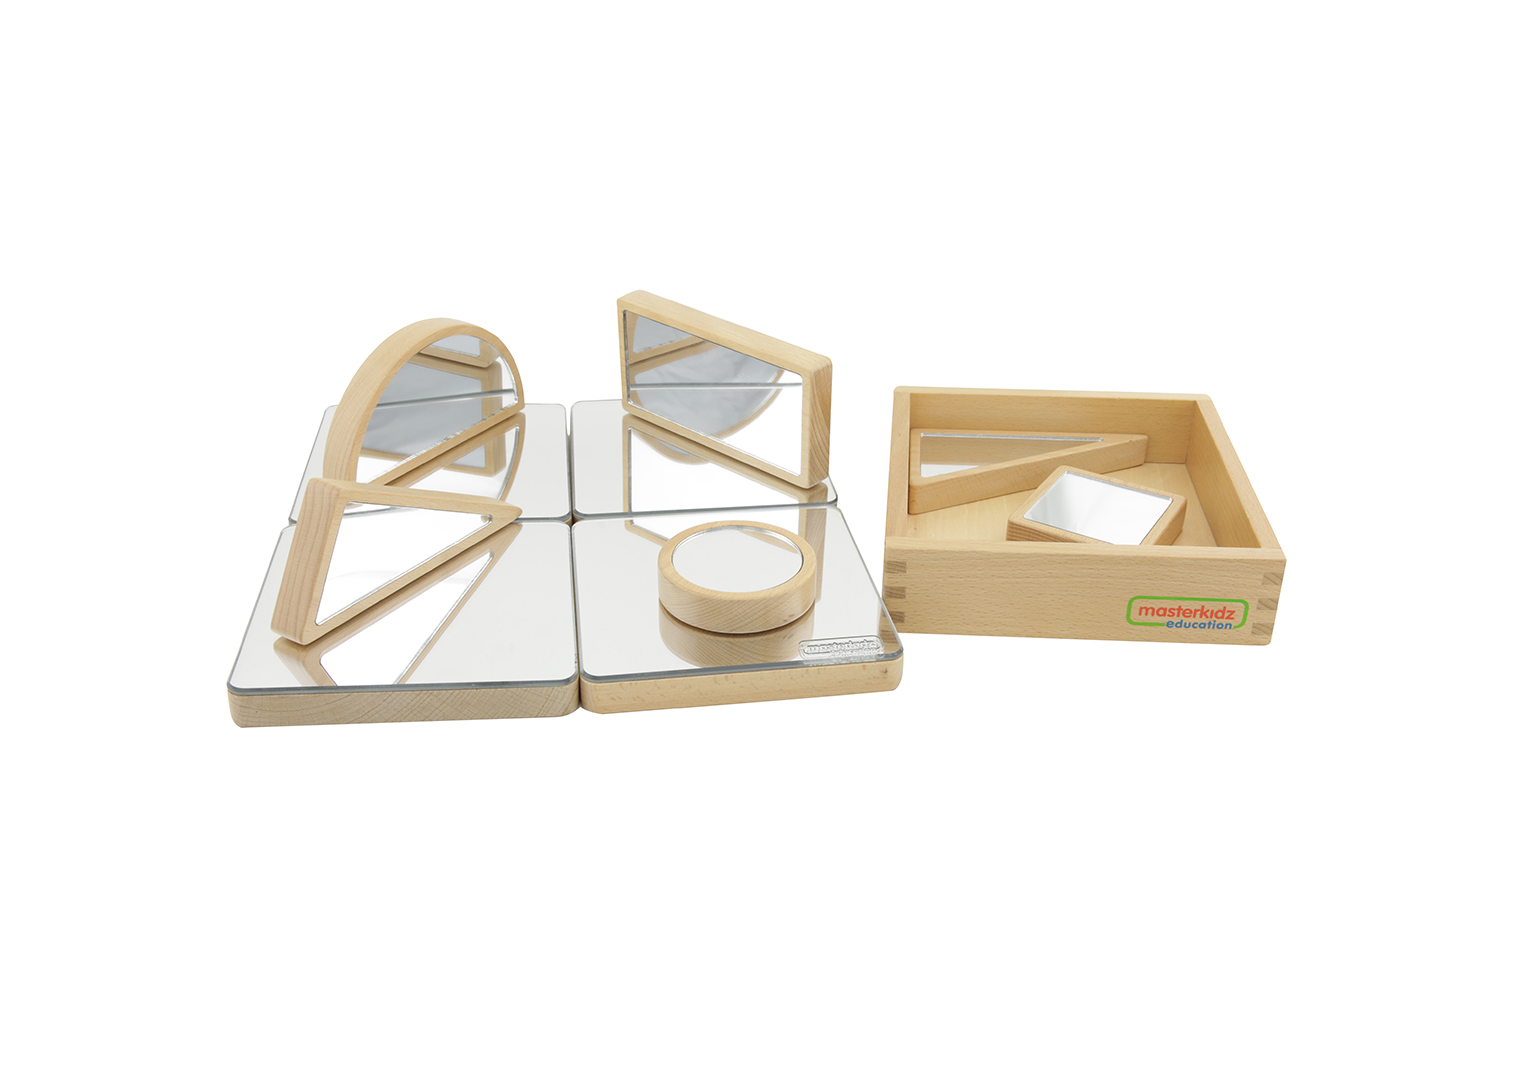 6-piece Mirror Block and Dry Erase Block Set